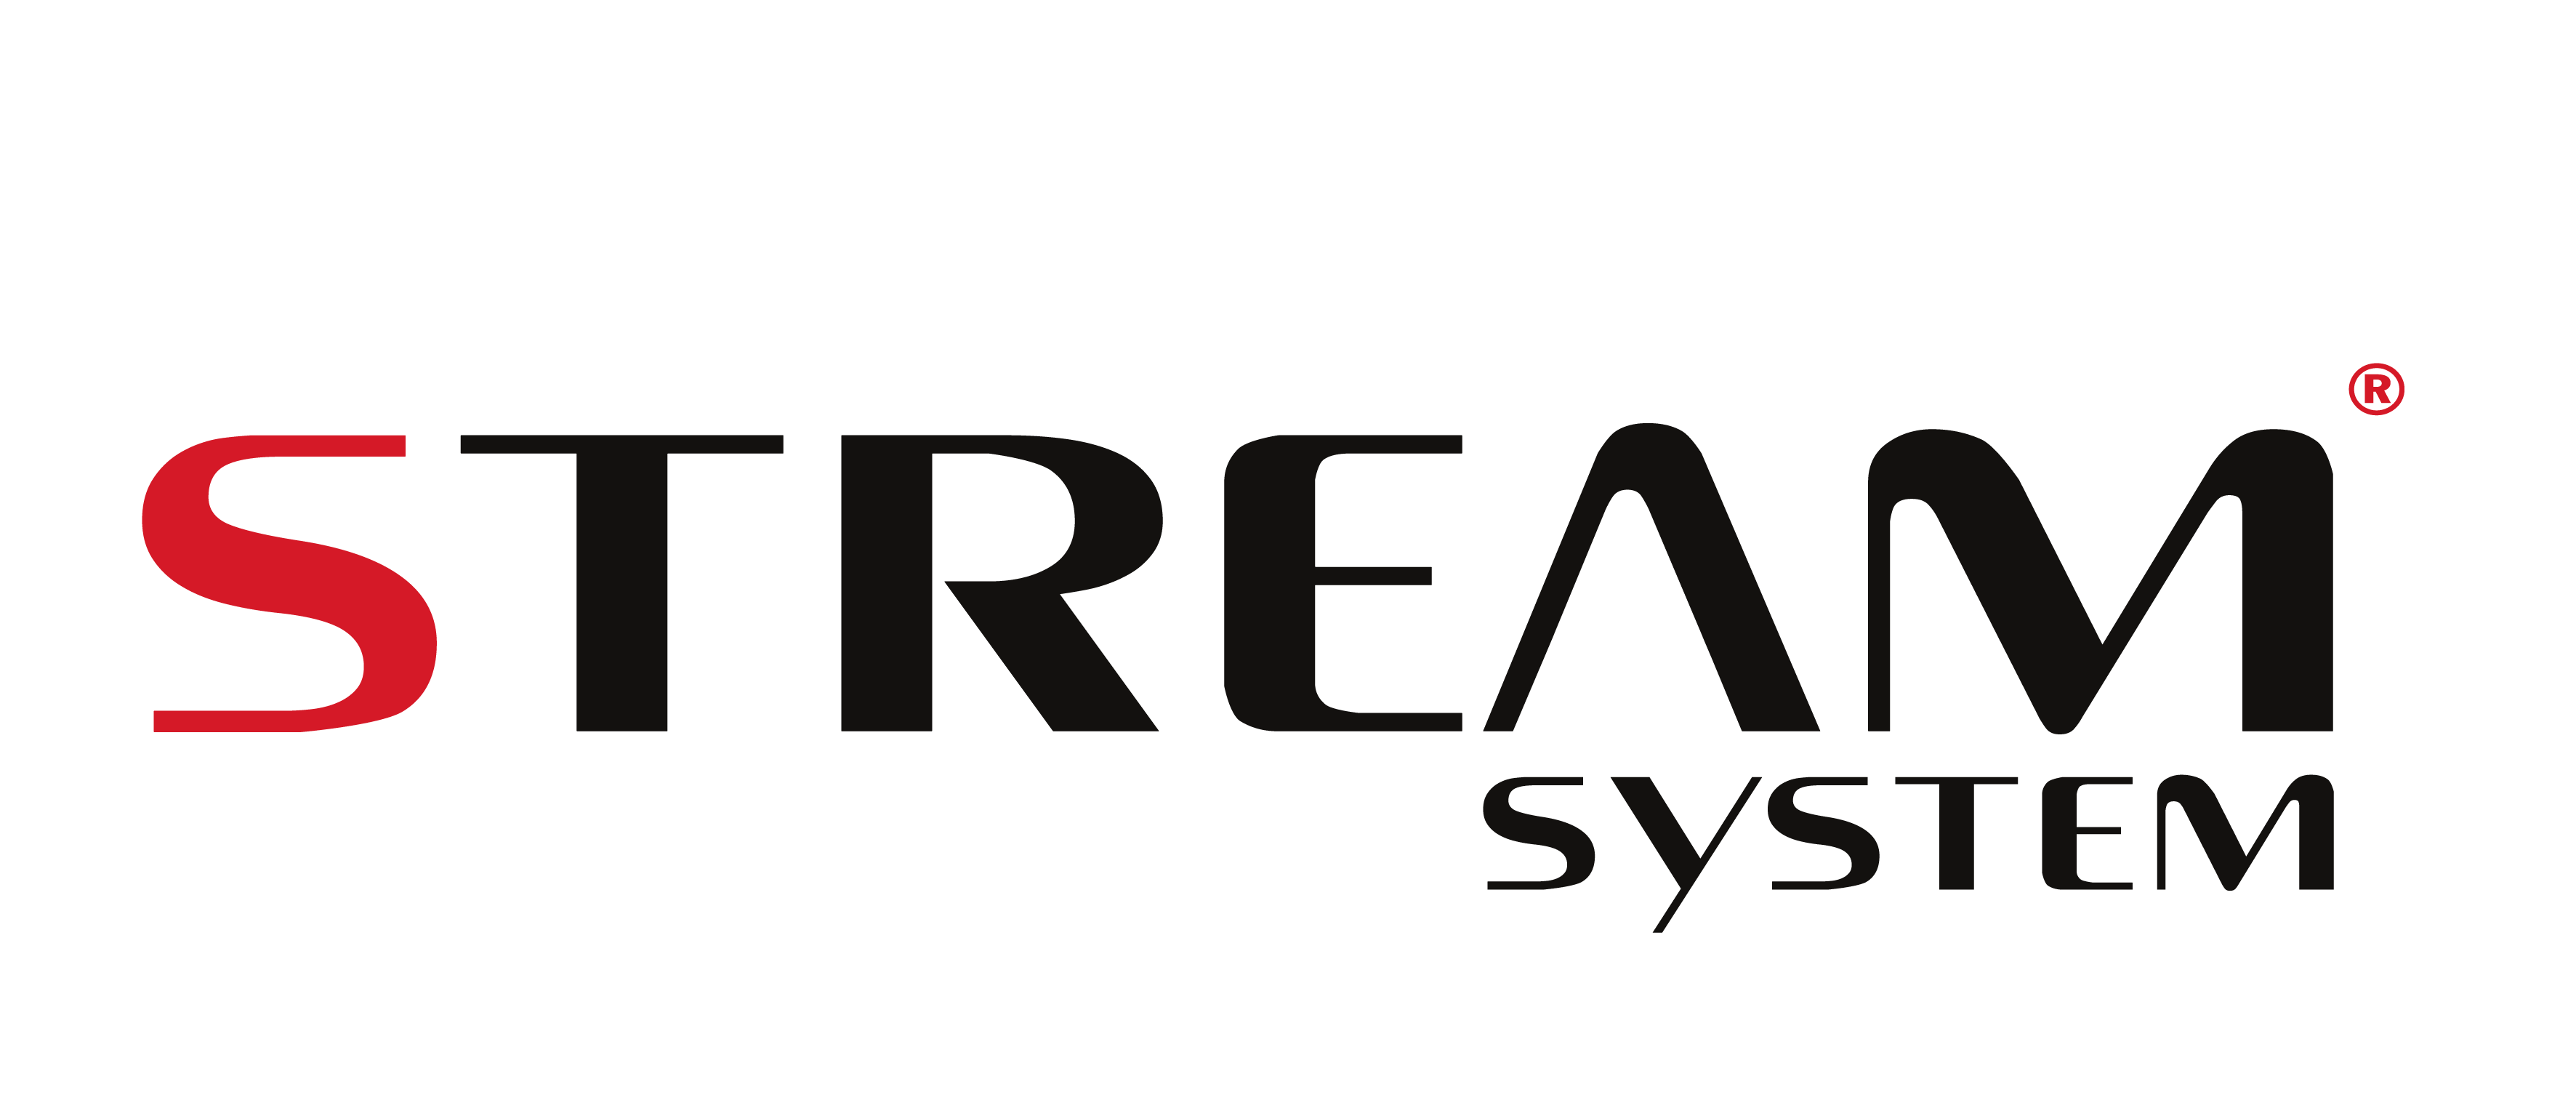 System stream. Stream логотип. Логотип для стрима. Надпись Stream. Наклейки для стрима.